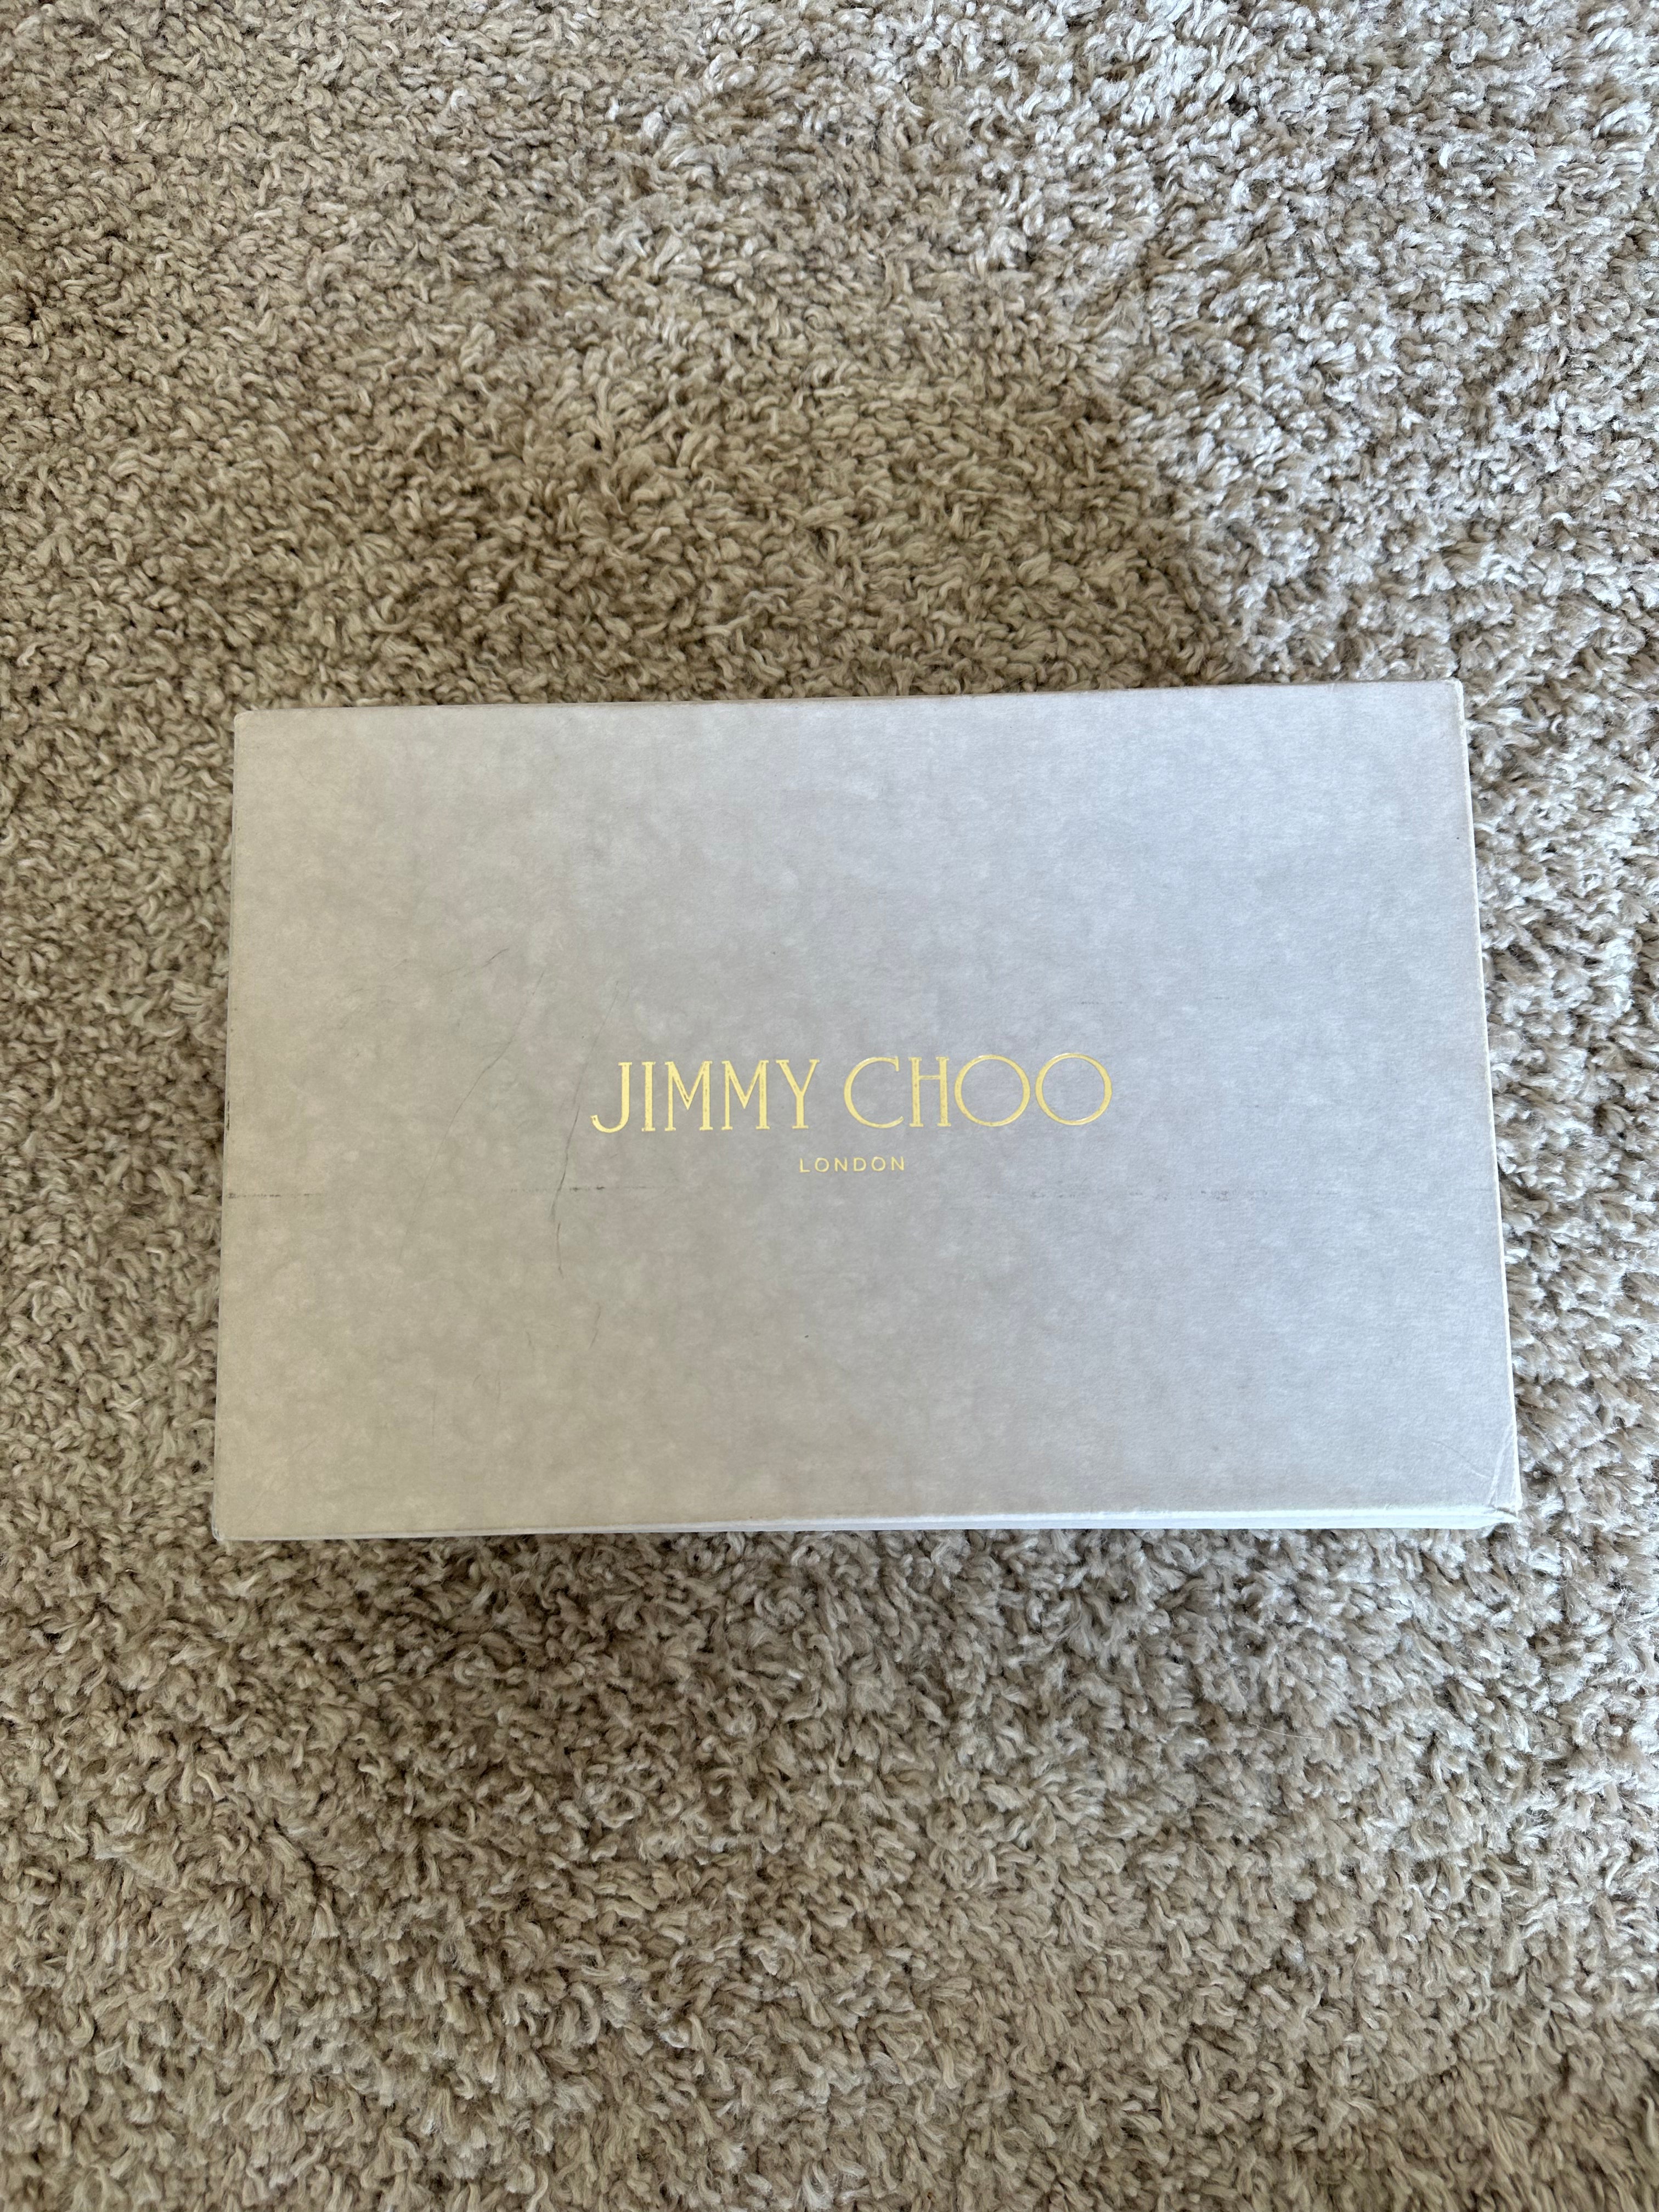 Jimmy Choo Heels (EU40)